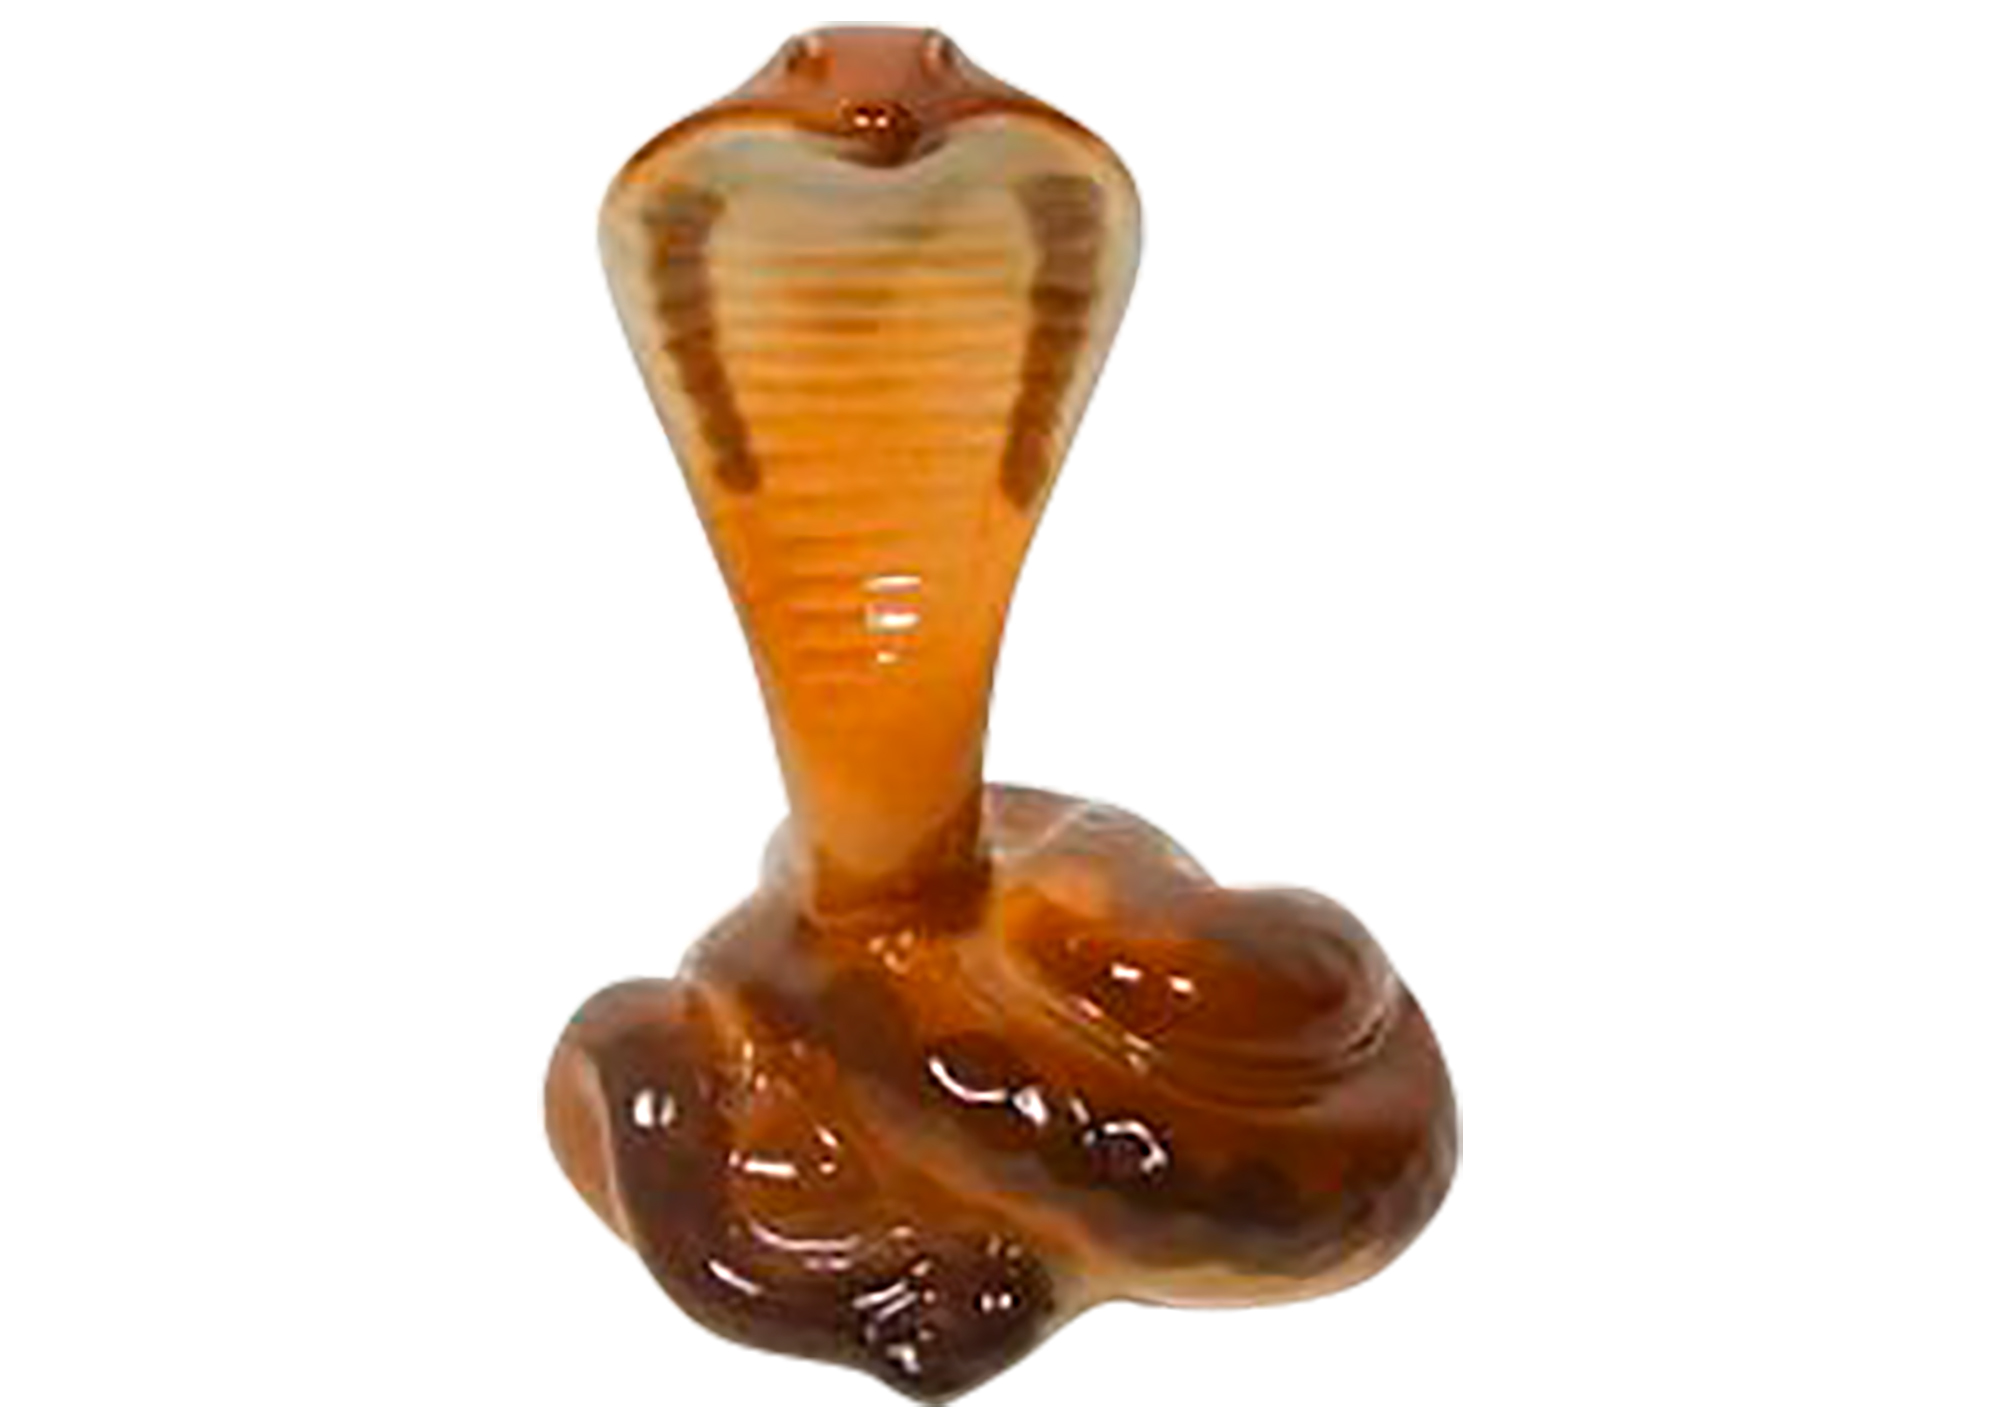 Buy Large Cobra Figurine at GoldenCockerel.com